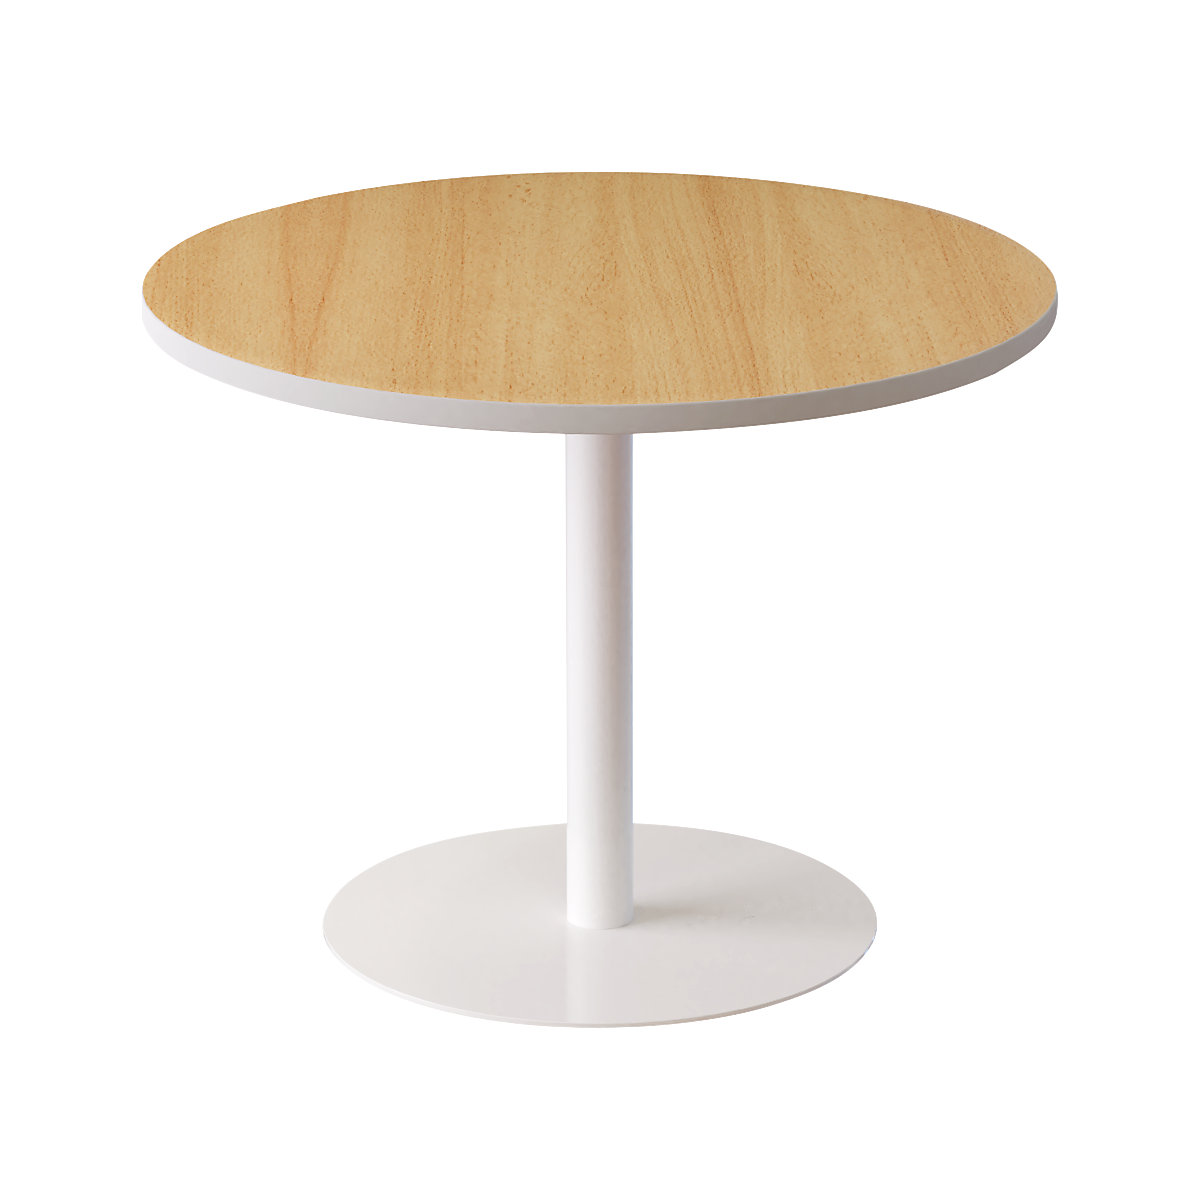 Lounge-tafel, rond, Ø 800 mm, beukenhoutdecor-2